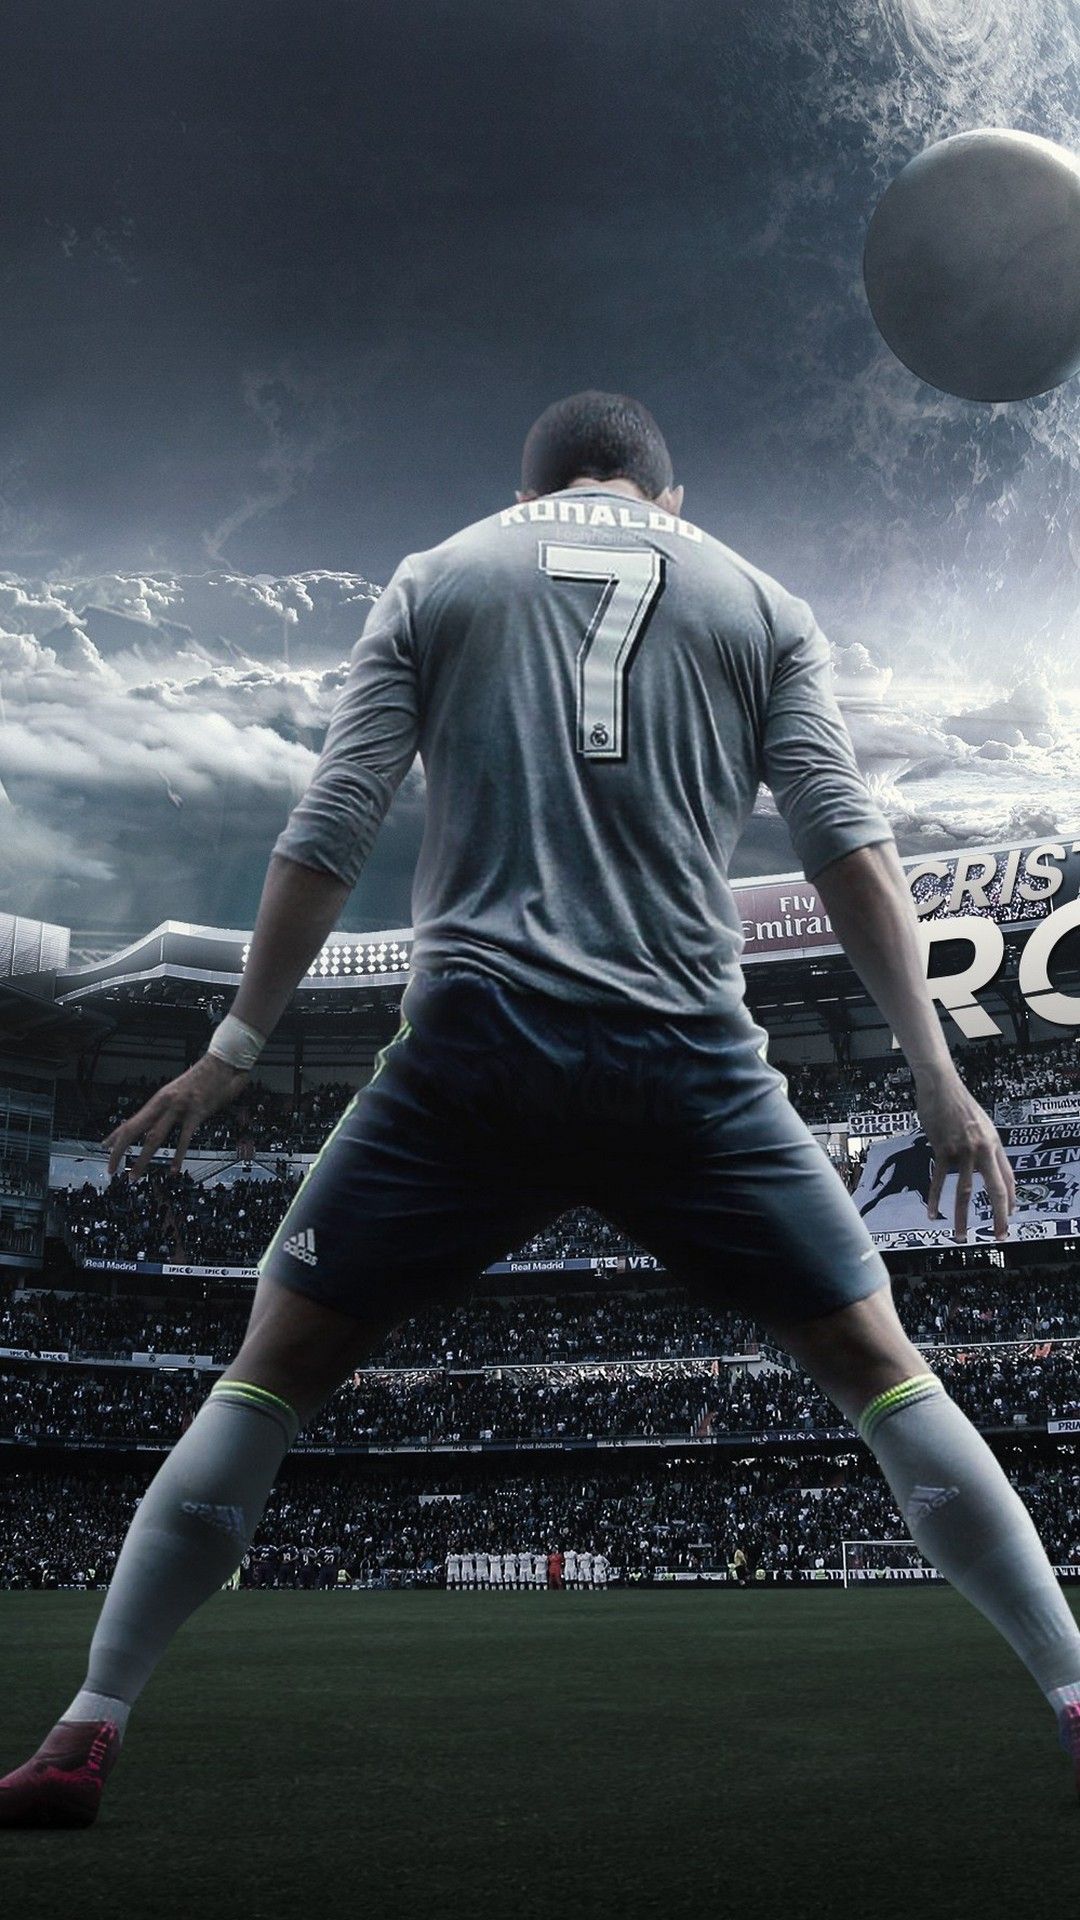 L i n c o 1 n on Twitter  wallpaper 4k   Cristiano Ronaldo   httpstcoLRM7A4bFJd  Twitter